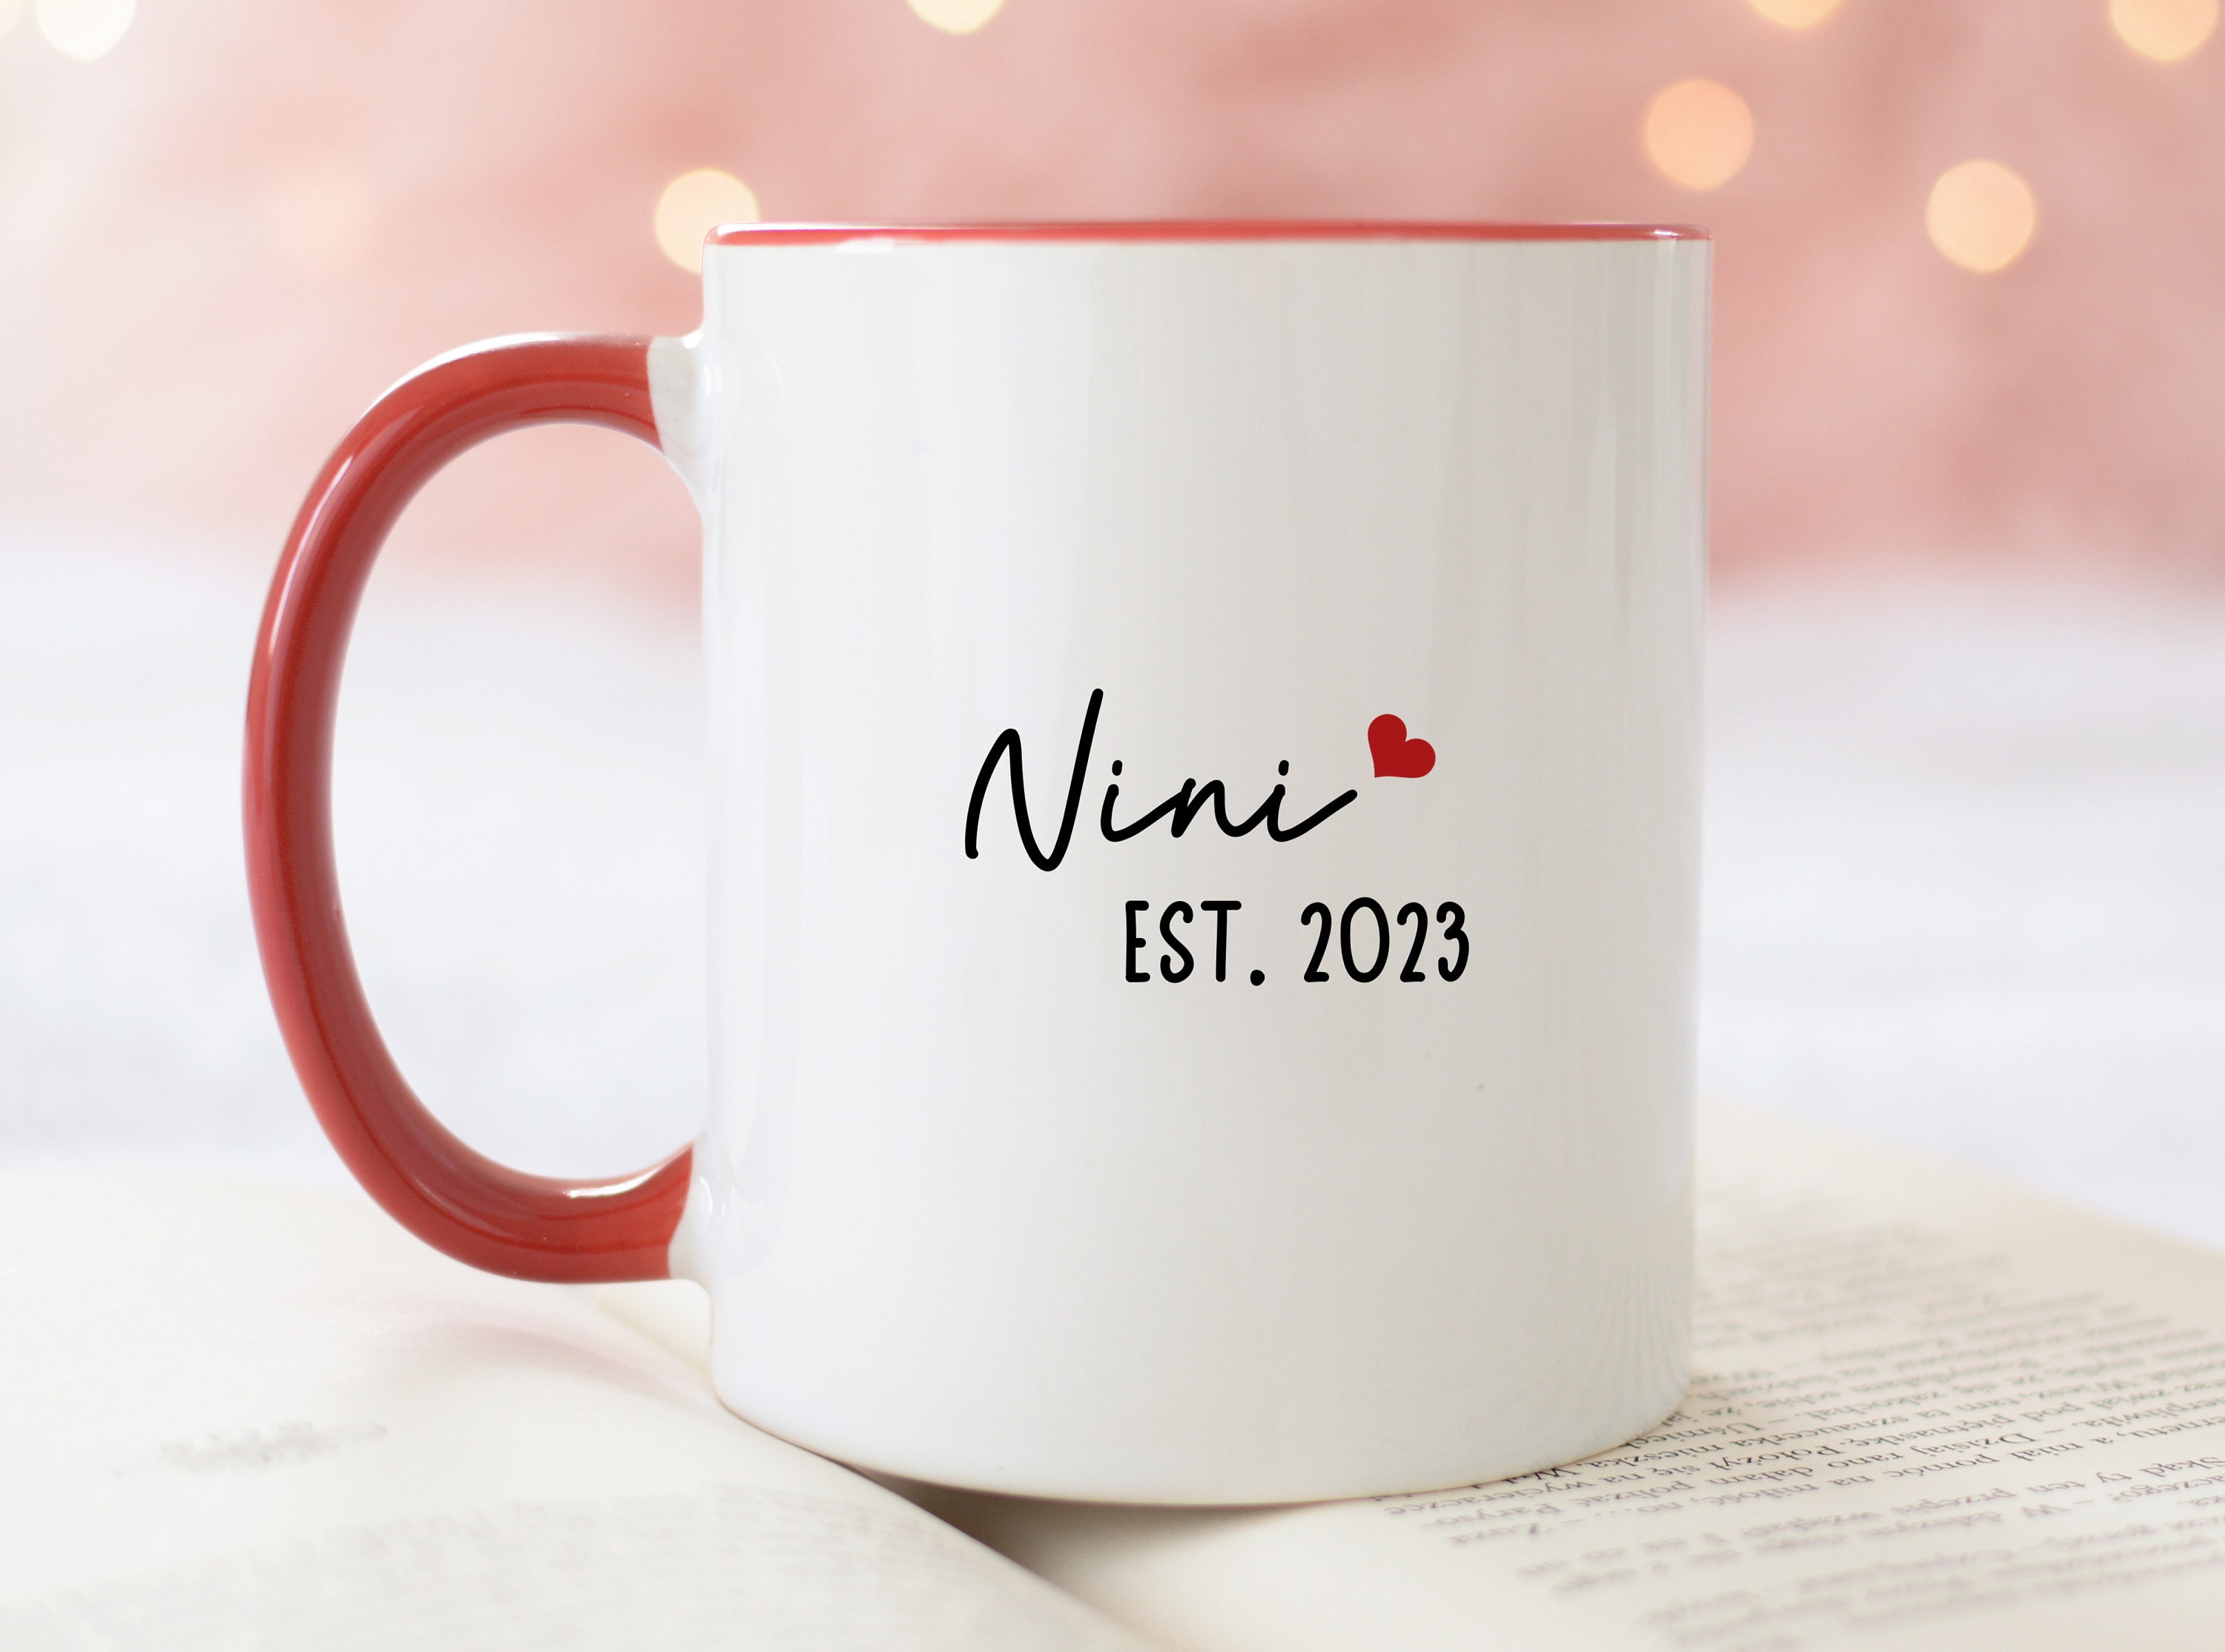 Nini Mug, Nini Gifts, Nini Est 2023 Mug, New Nini Gifts, Promoted